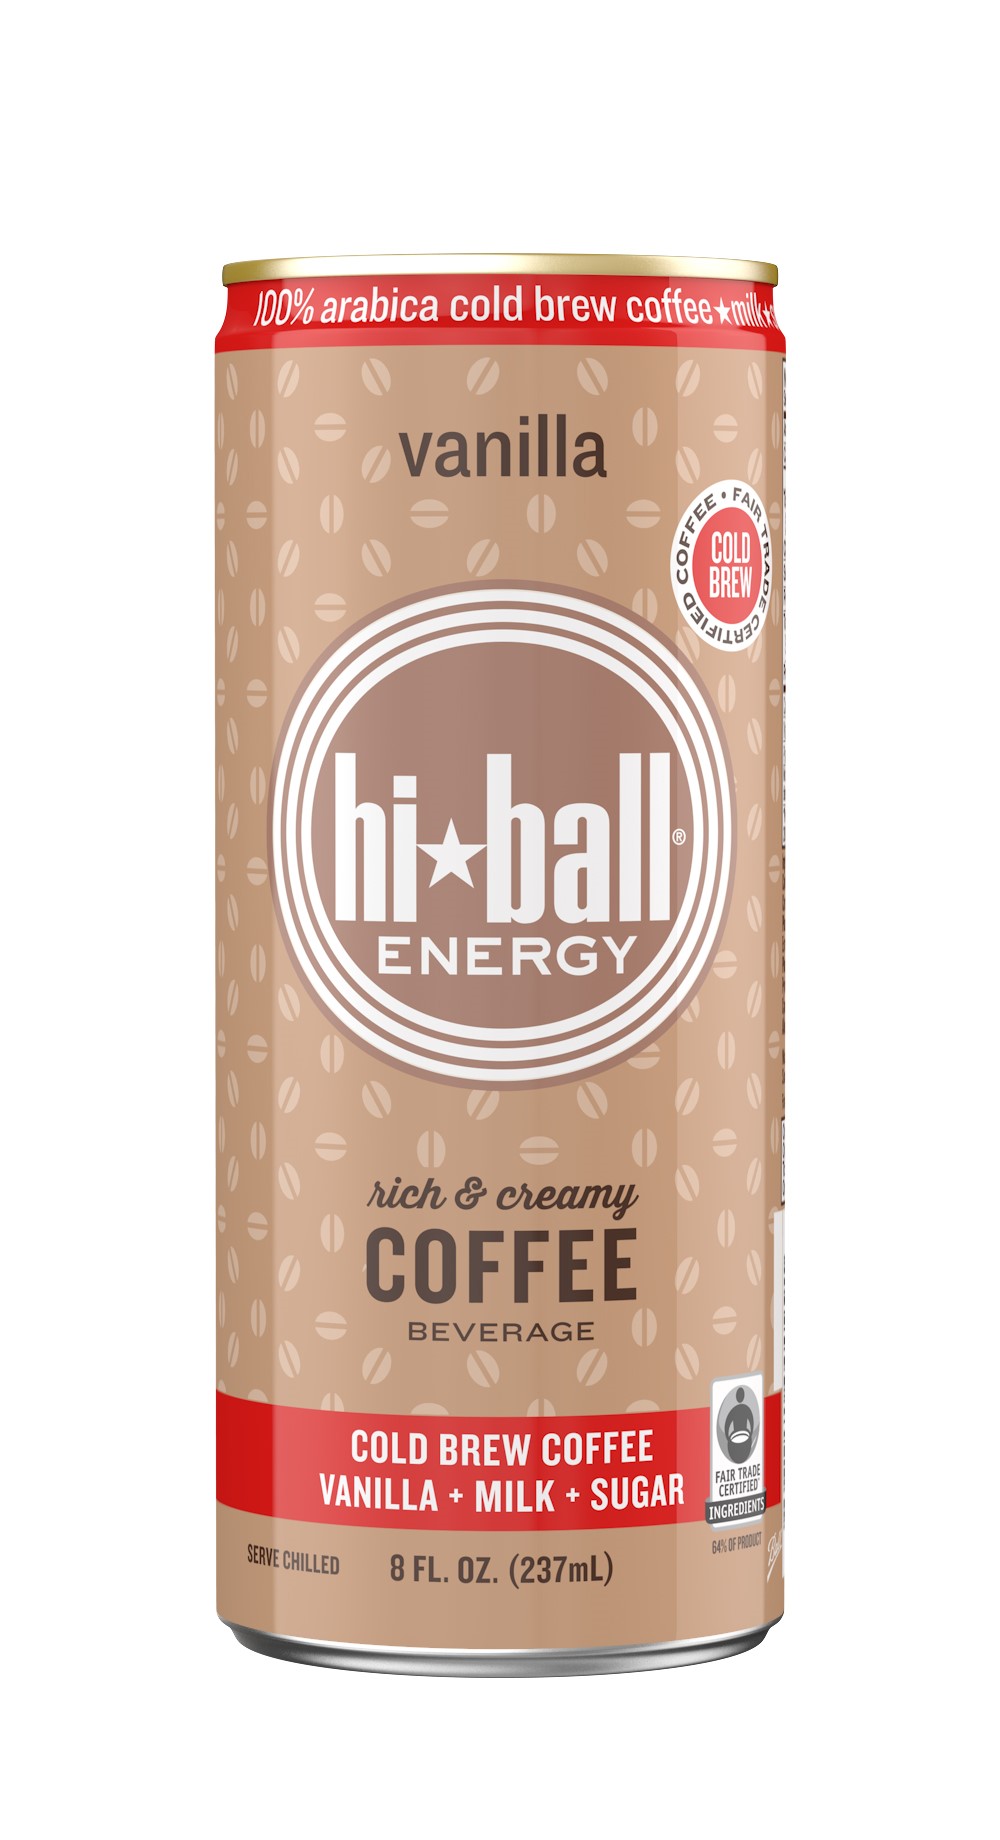 Highball Energy Cold Brew - Vanilla by Hiball Inc.